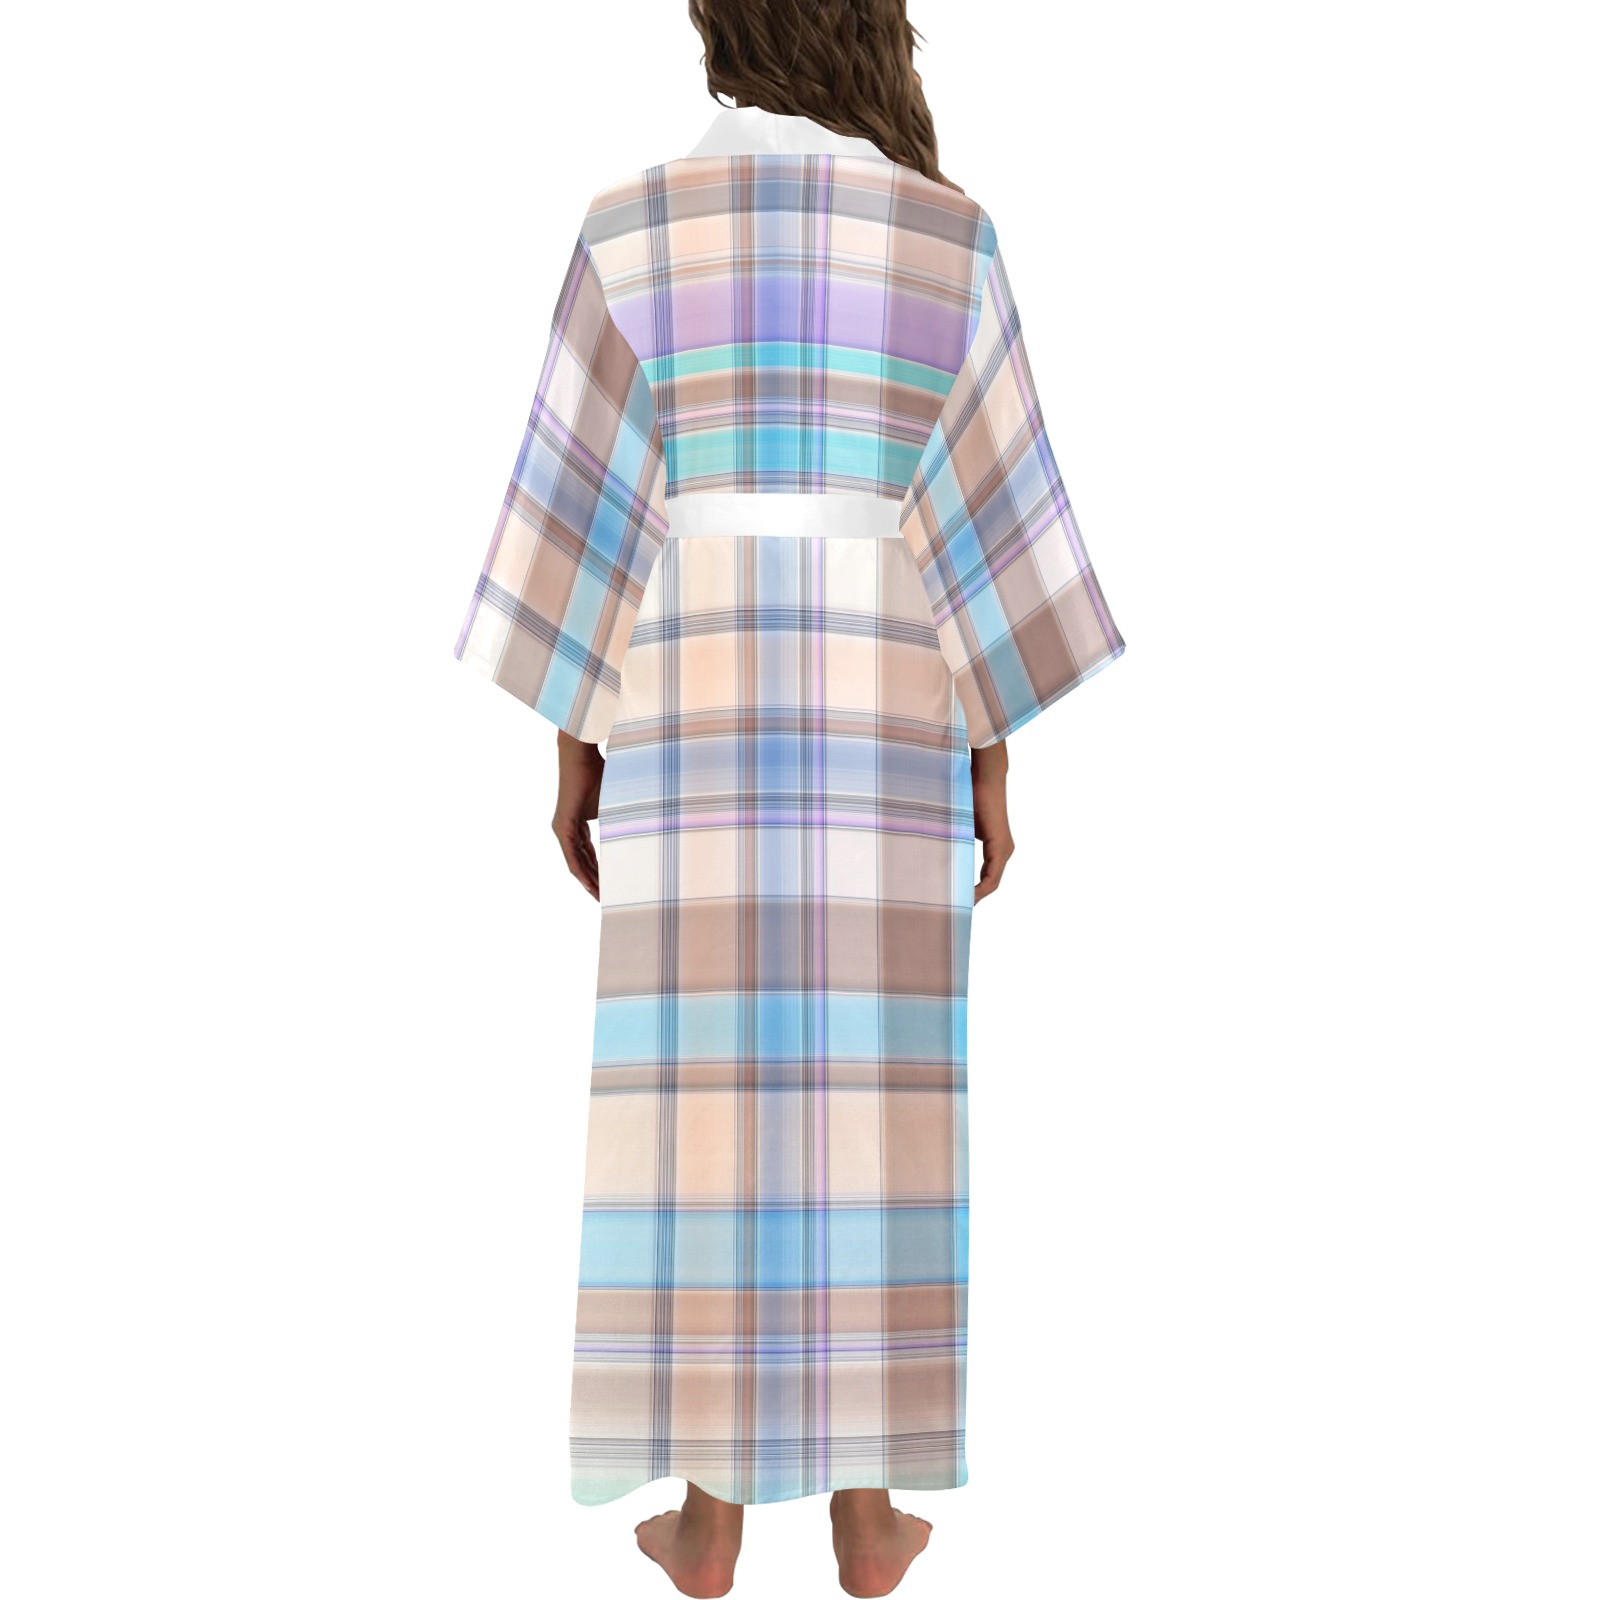 Pastels Plaid Long Kimono Robe